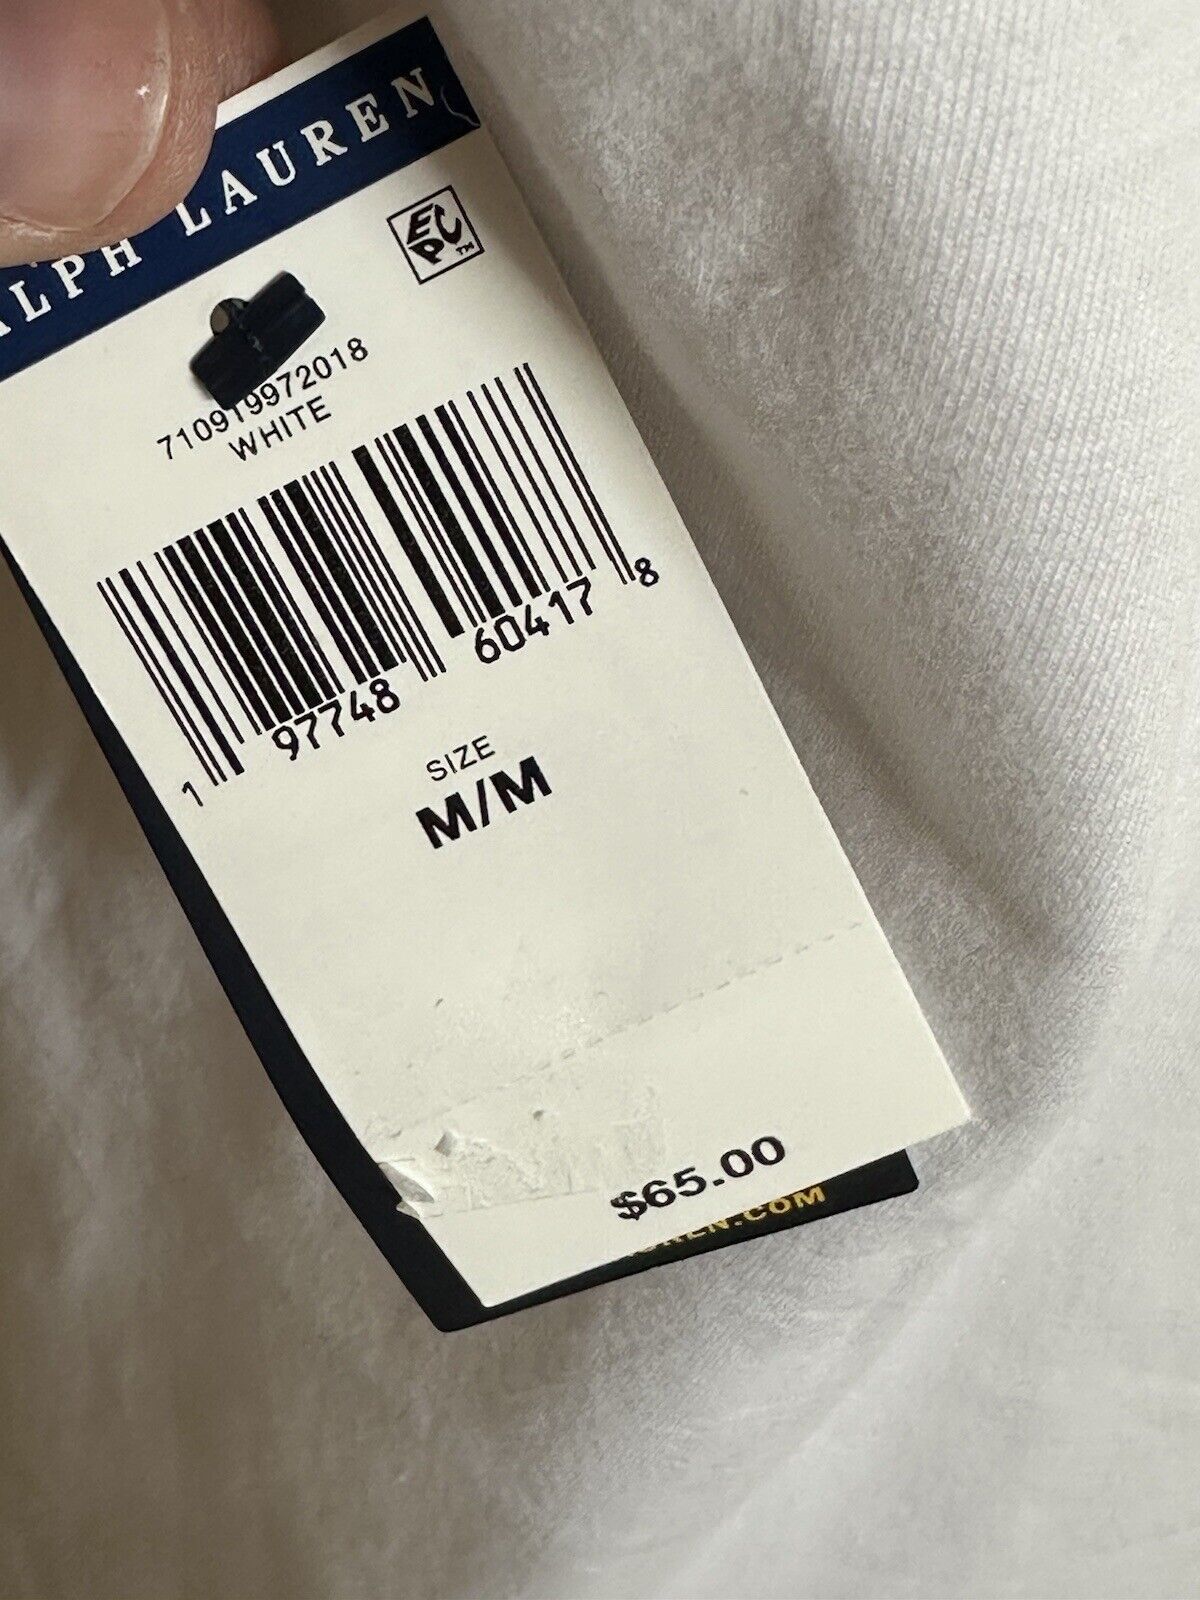 NWT $65 Polo Ralph Lauren Short Sleeve Signature Logo T-shirt White M